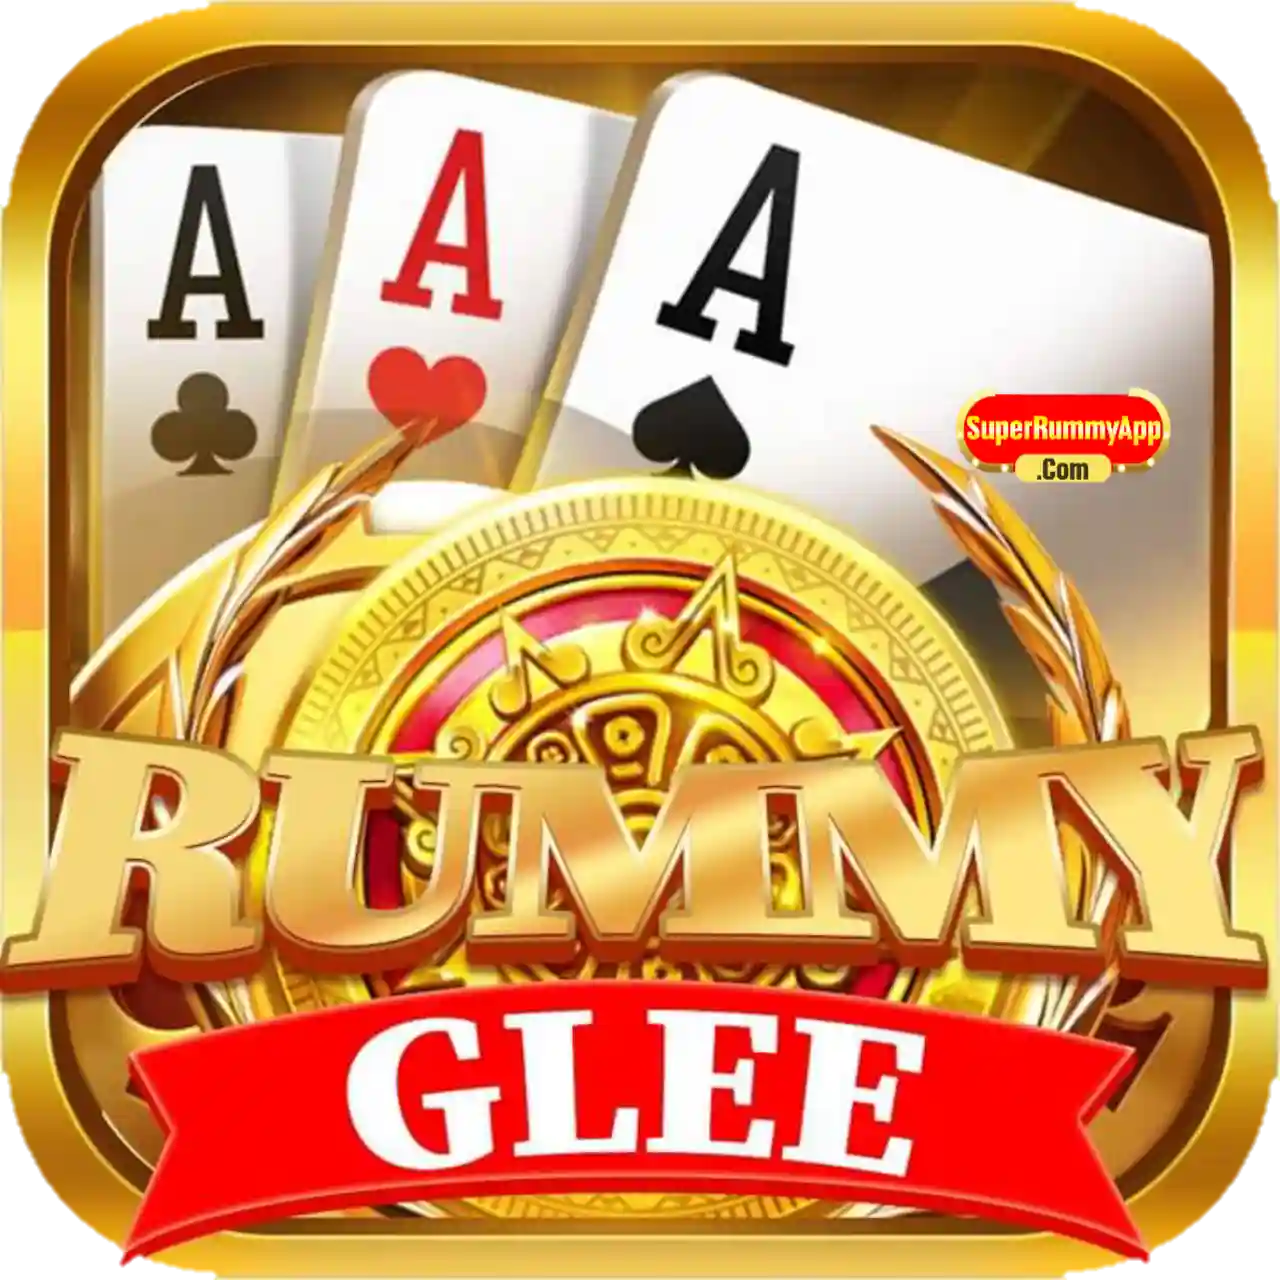 Rummy Glee App Download All Rummy Apps List - Super Rummy App